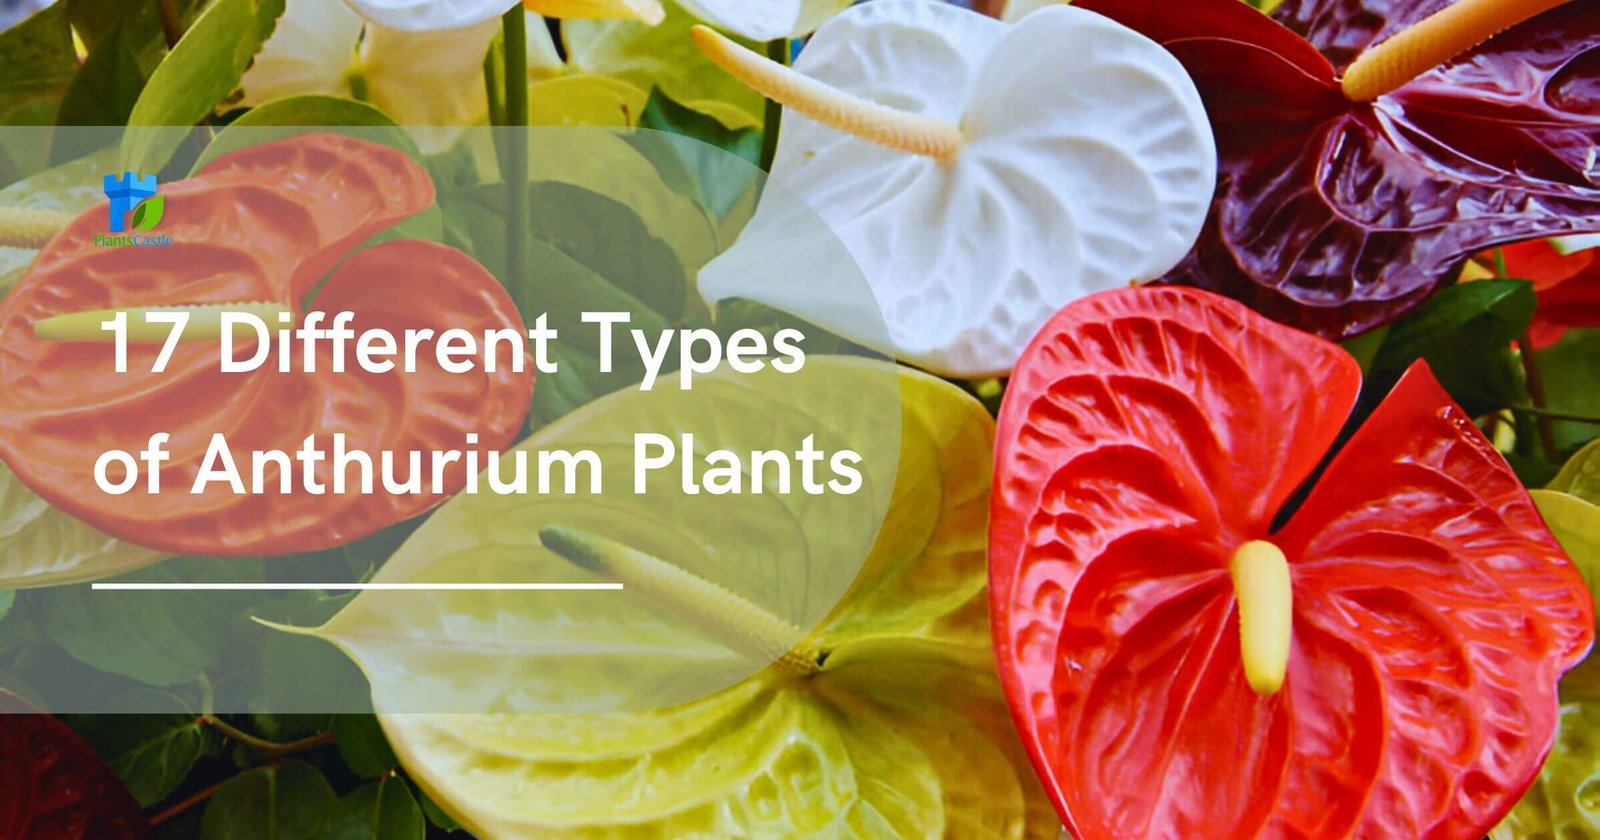 17 Different Types of Anthurium Plants